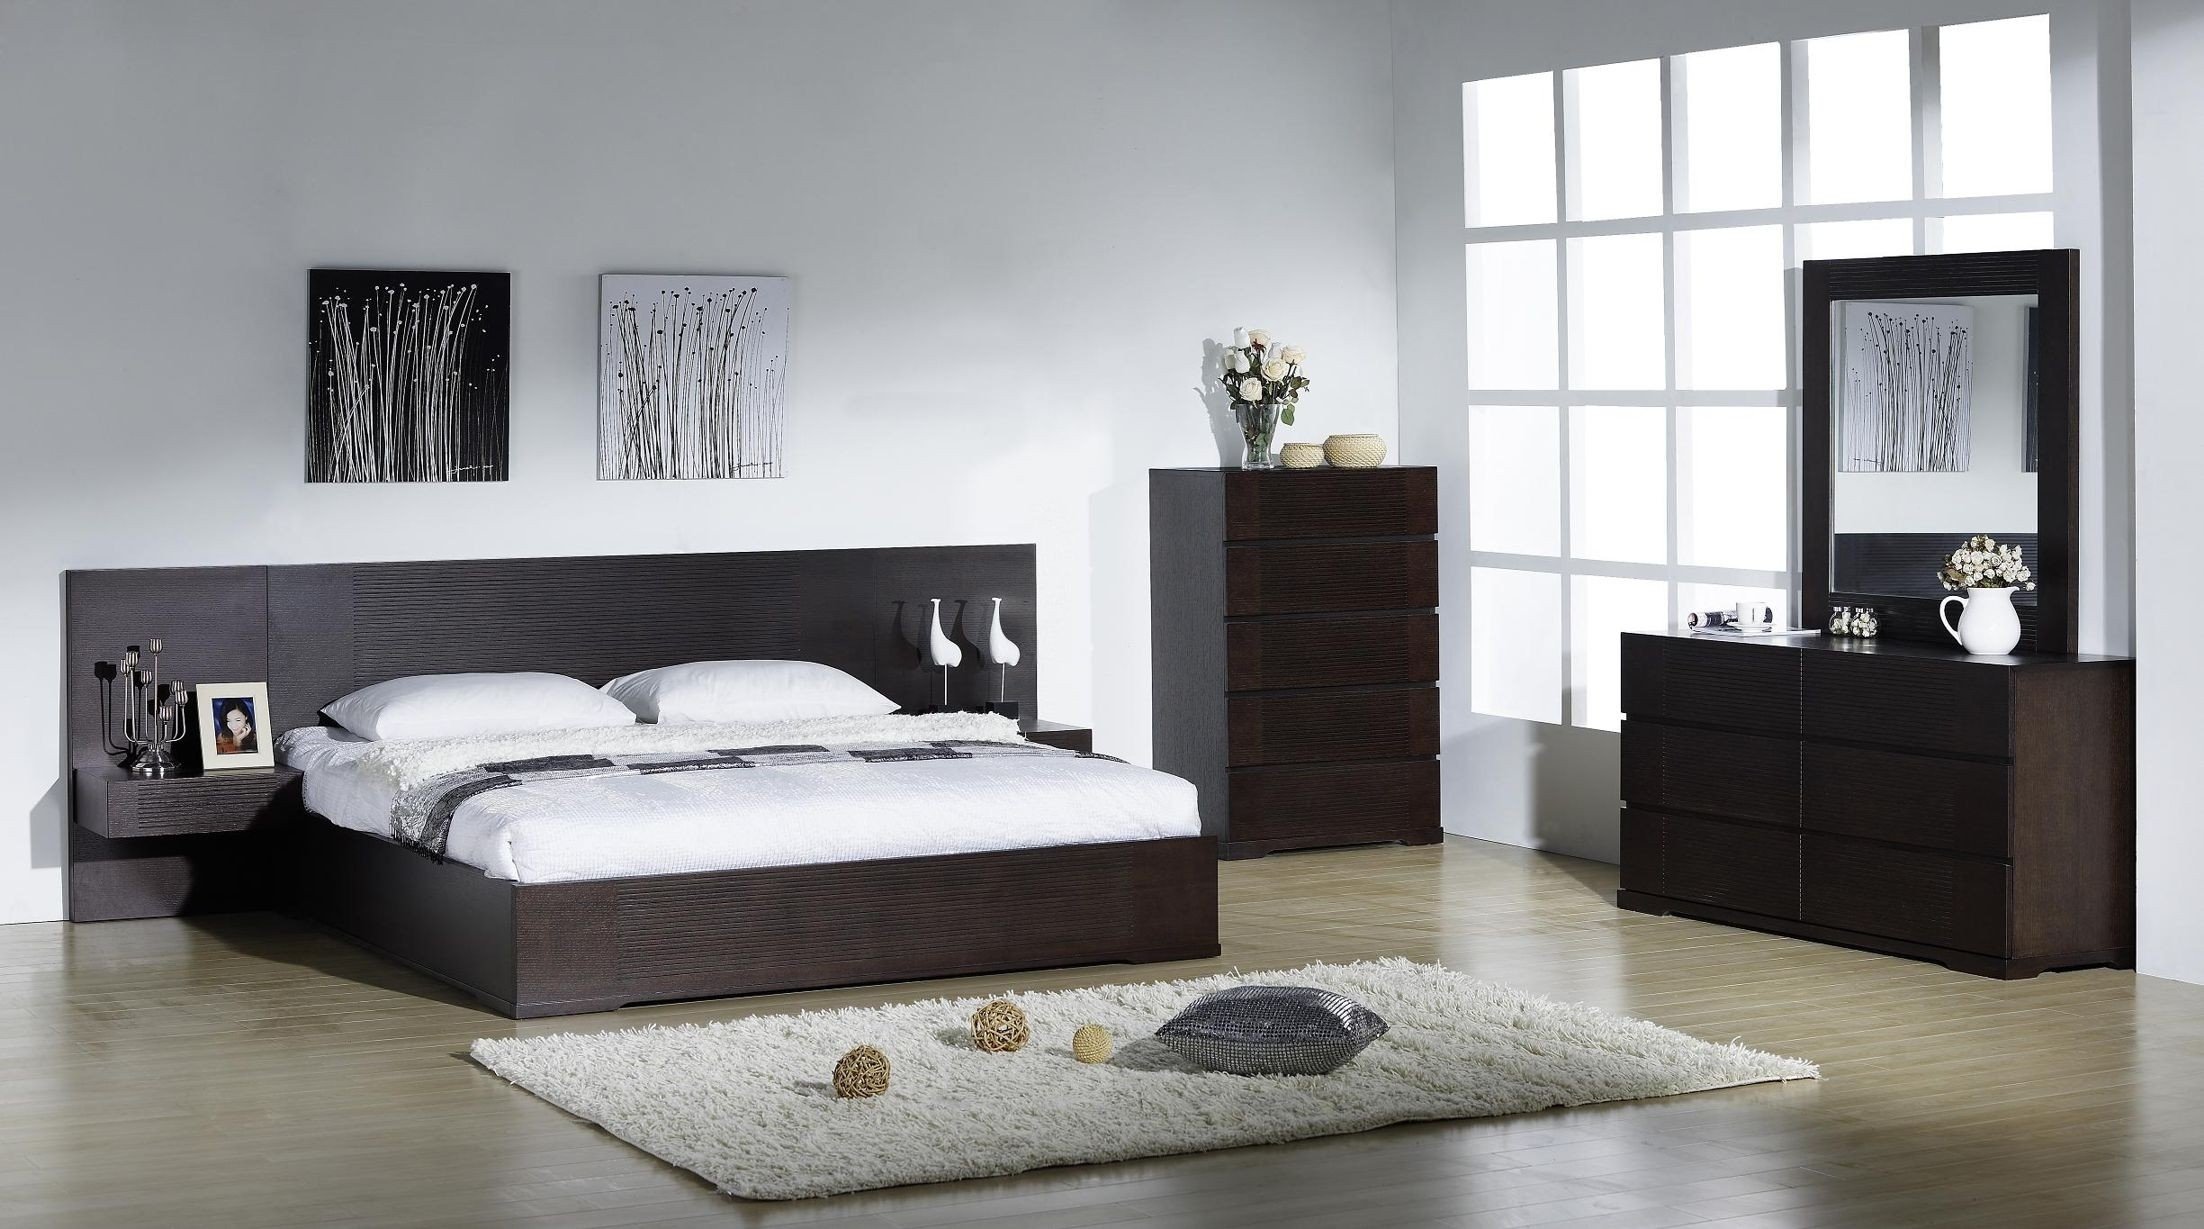 modern bedroom furniture sets bedroom new bedroom furniture sets ideas white bedroom furniture in contemporary SJYKEZA